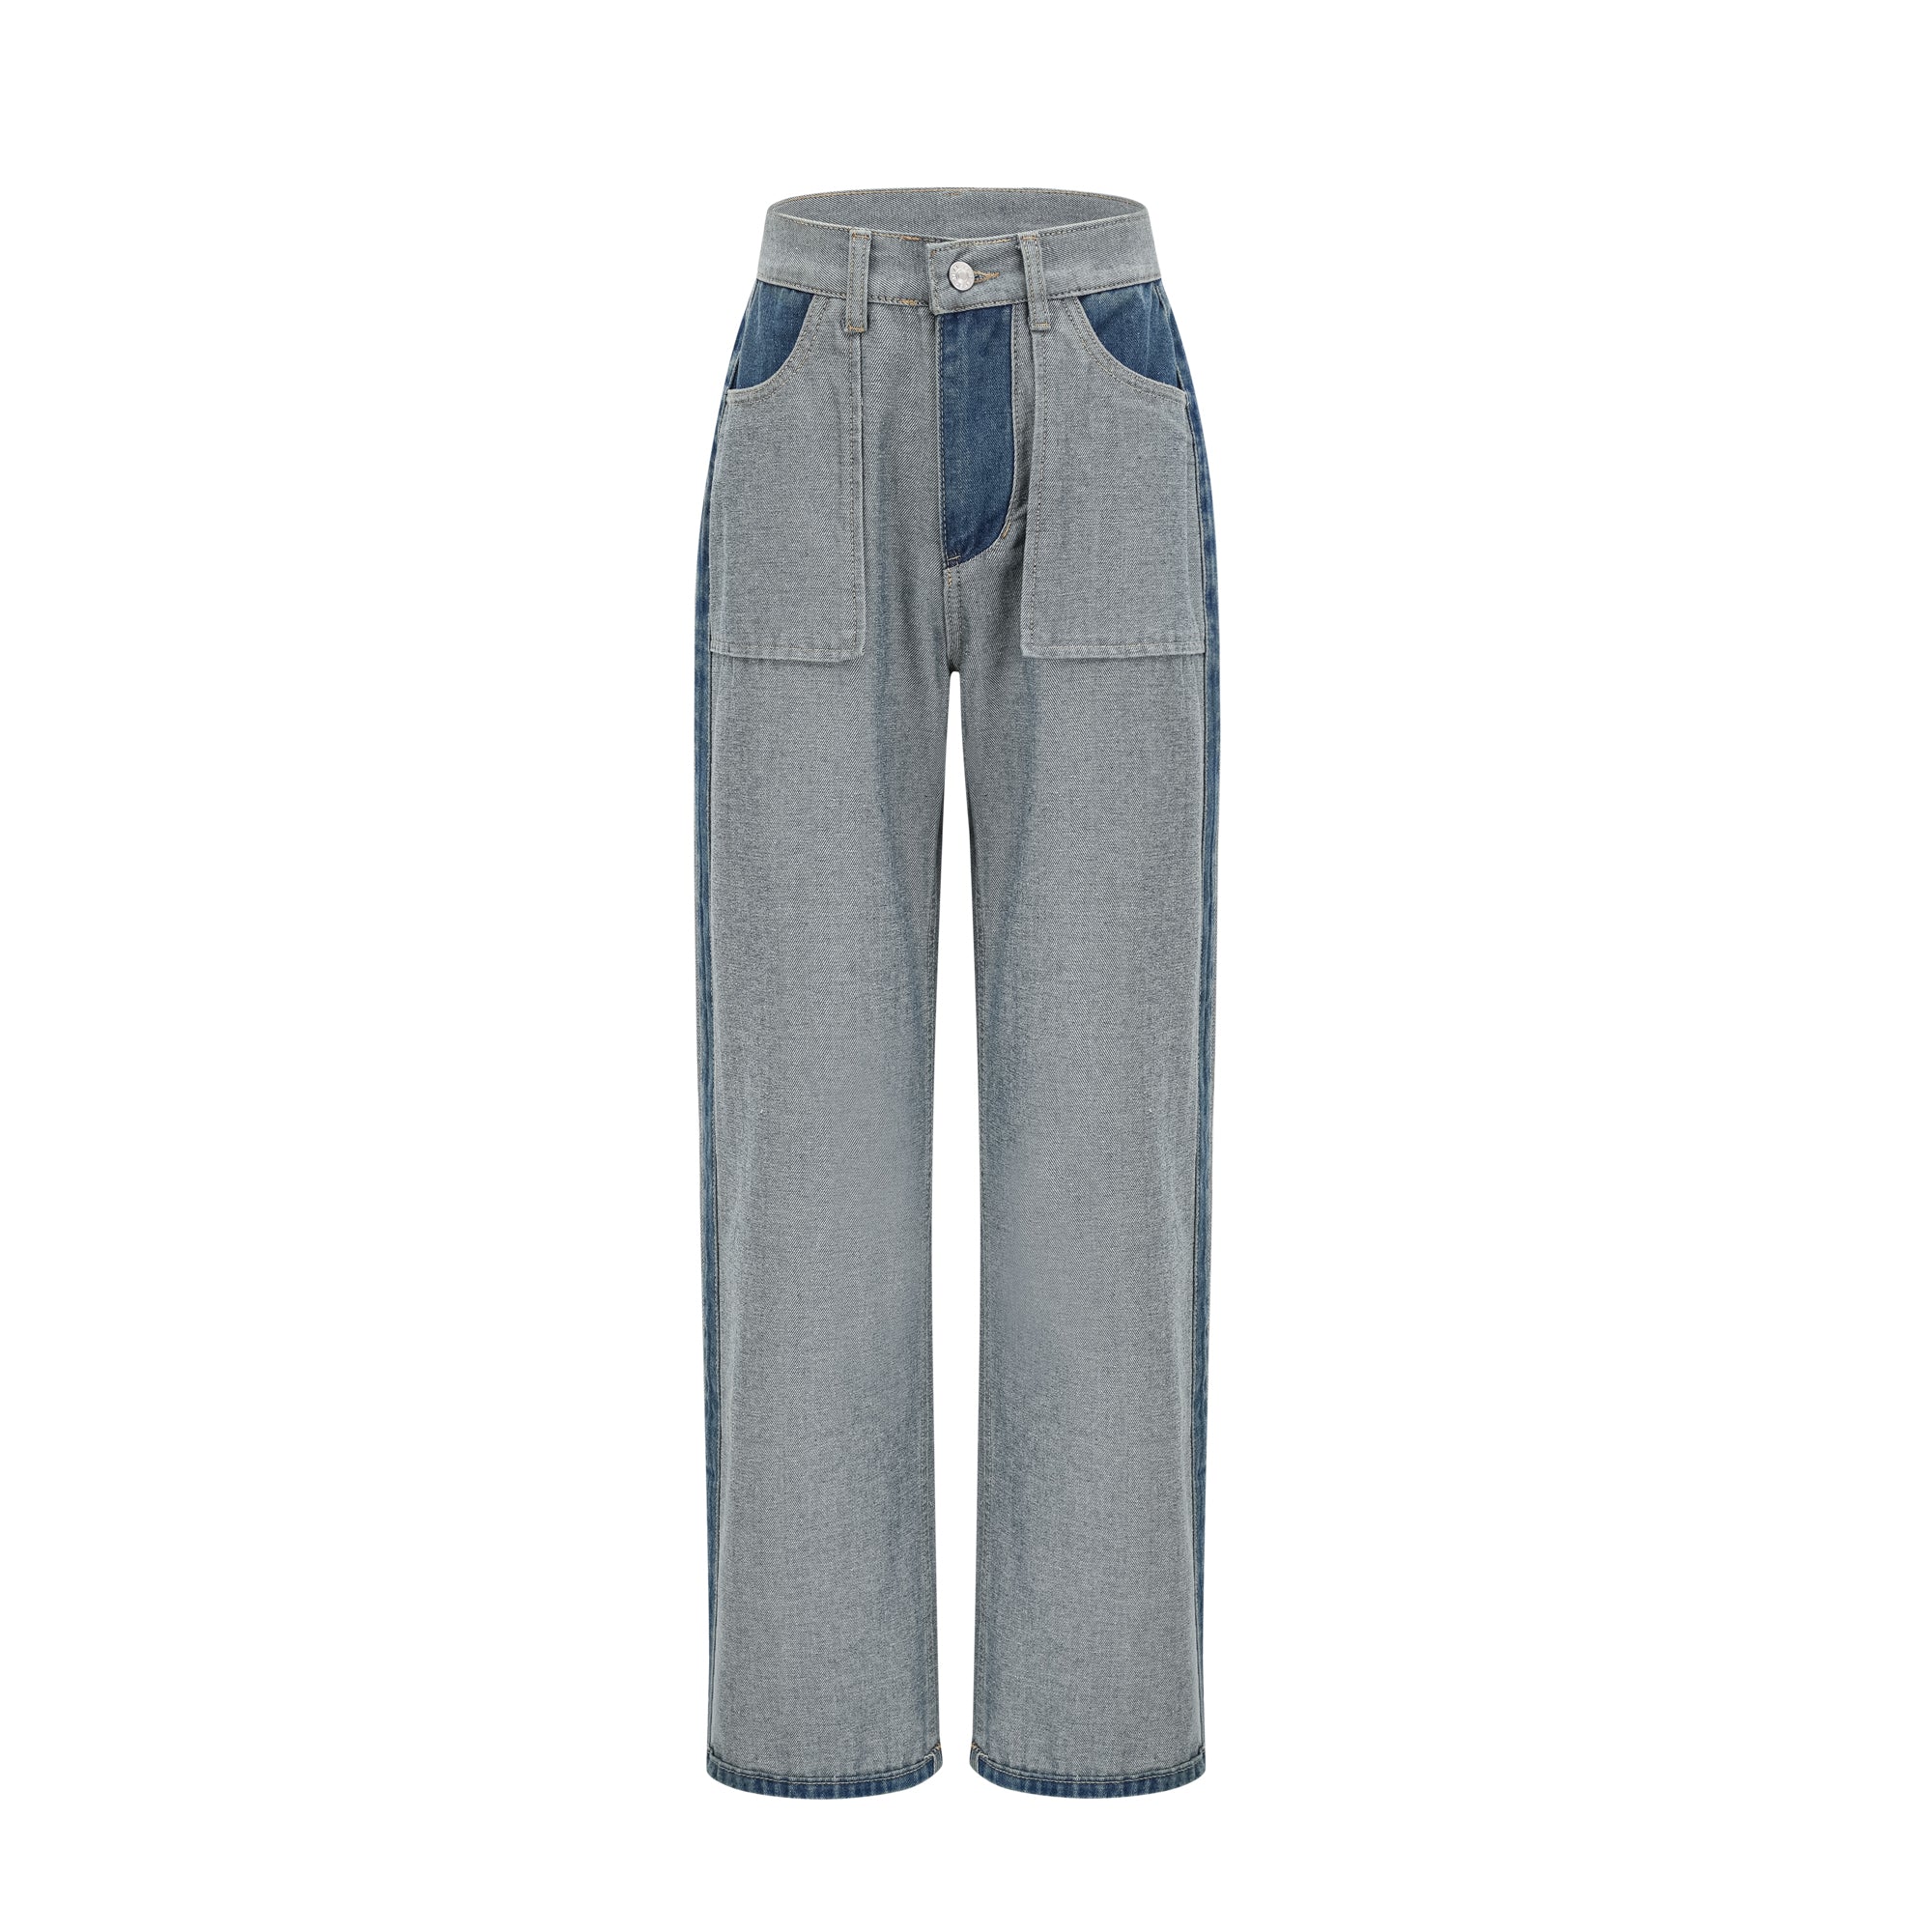 Clothilde wide-leg panelled jeans